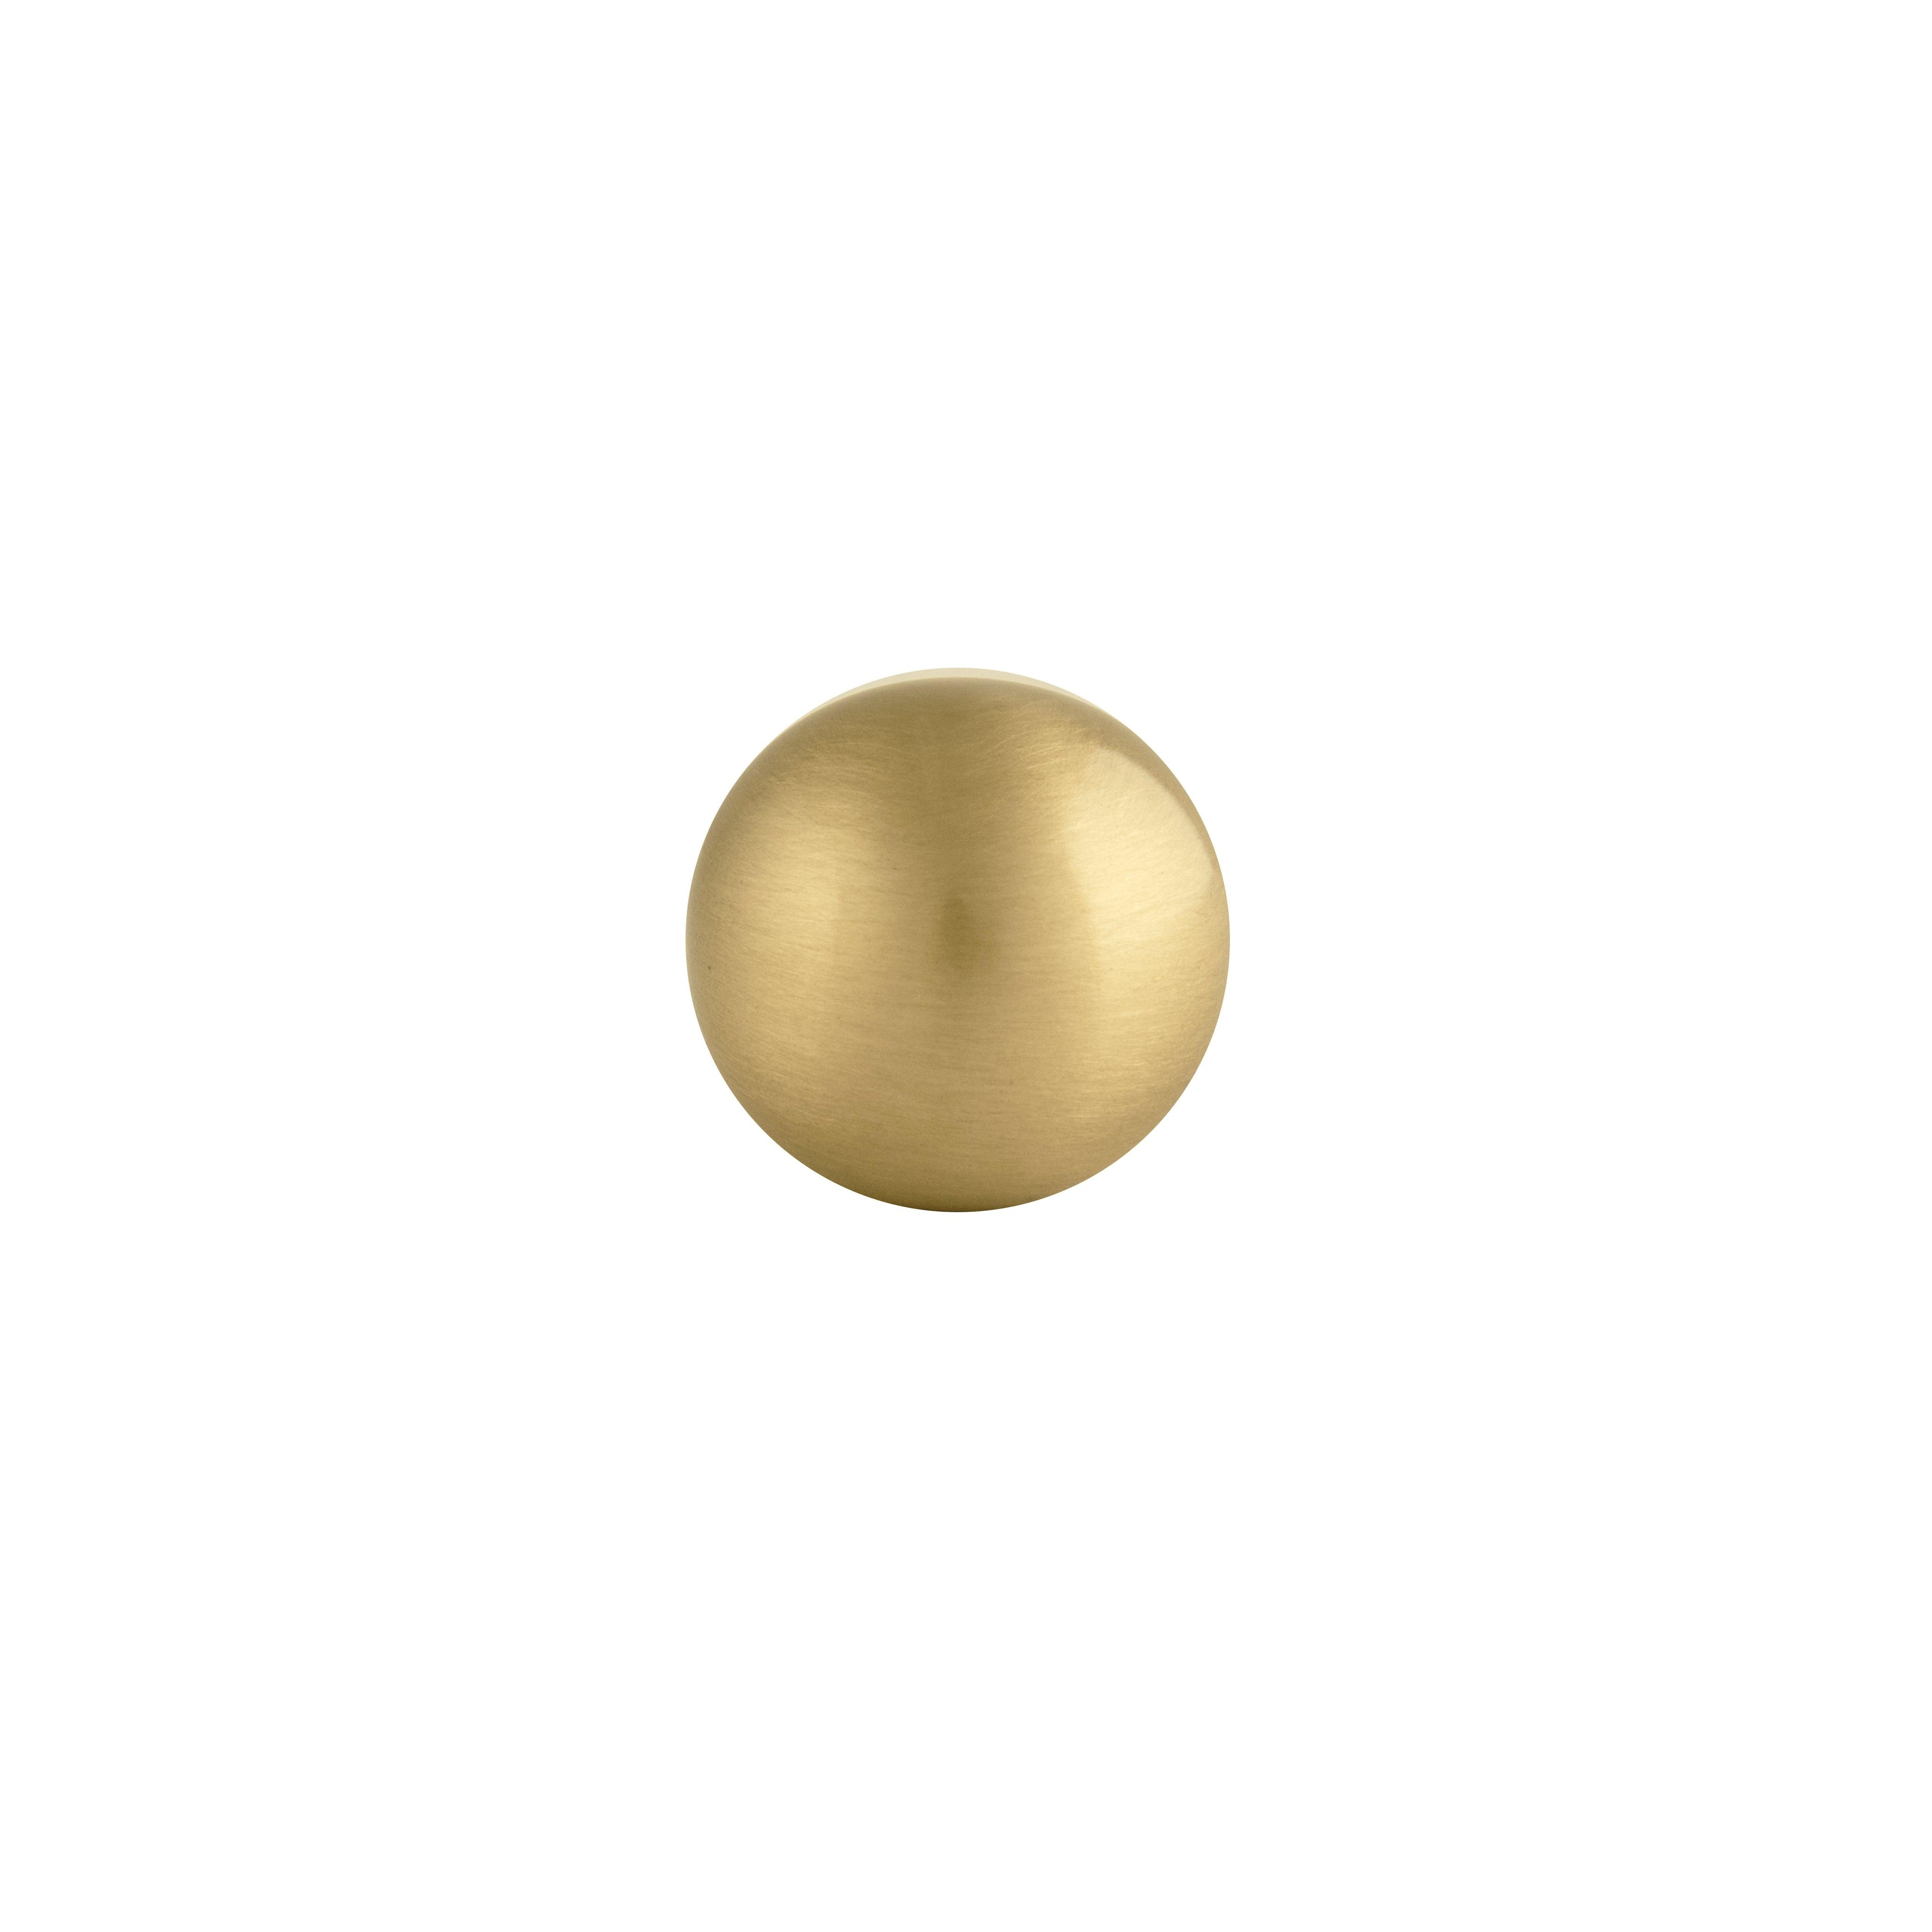 Zenith Knob Knob 30mm / Gold / Brass - M A N T A R A